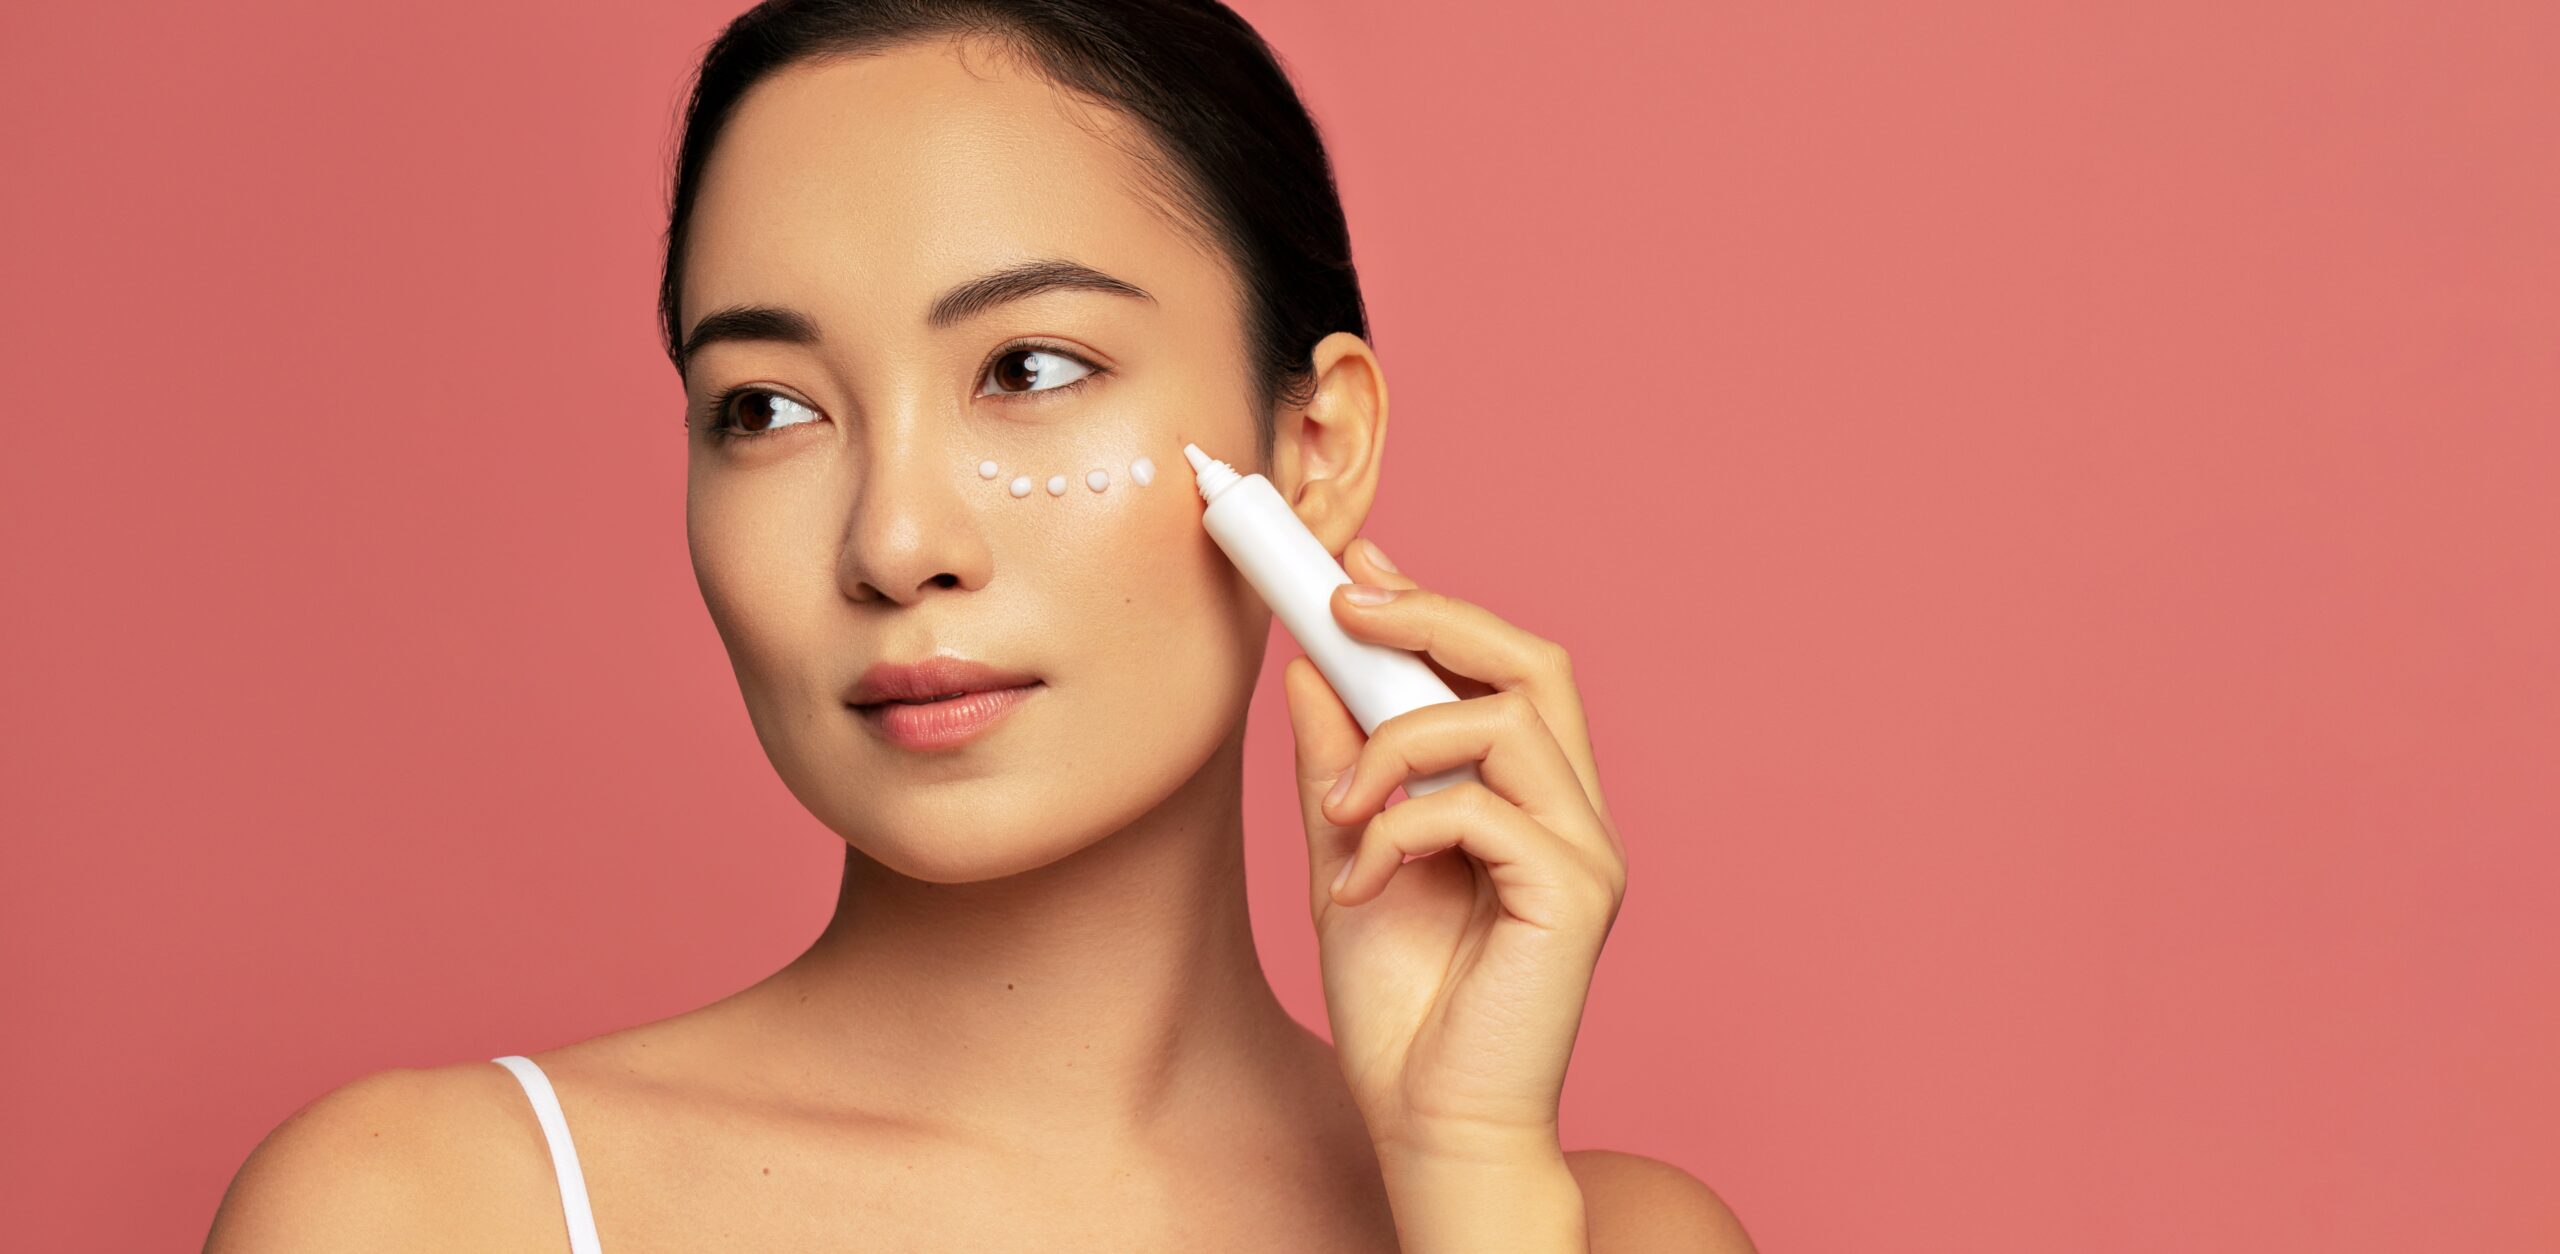 10 remarkable ways moisturising helps with skin health